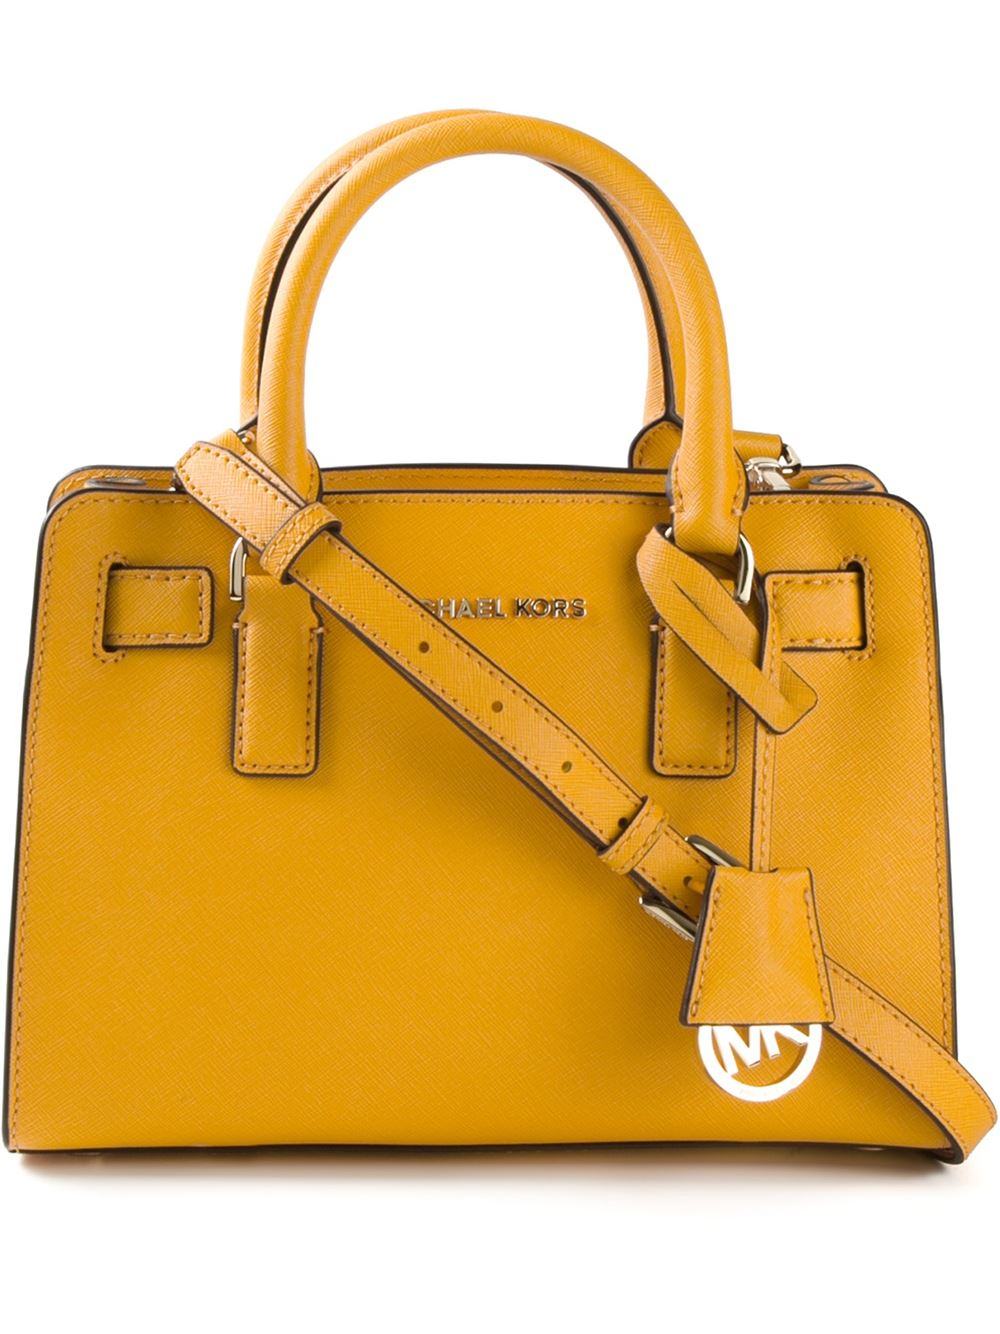 Michael Kors Handbags Yellow | semashow.com